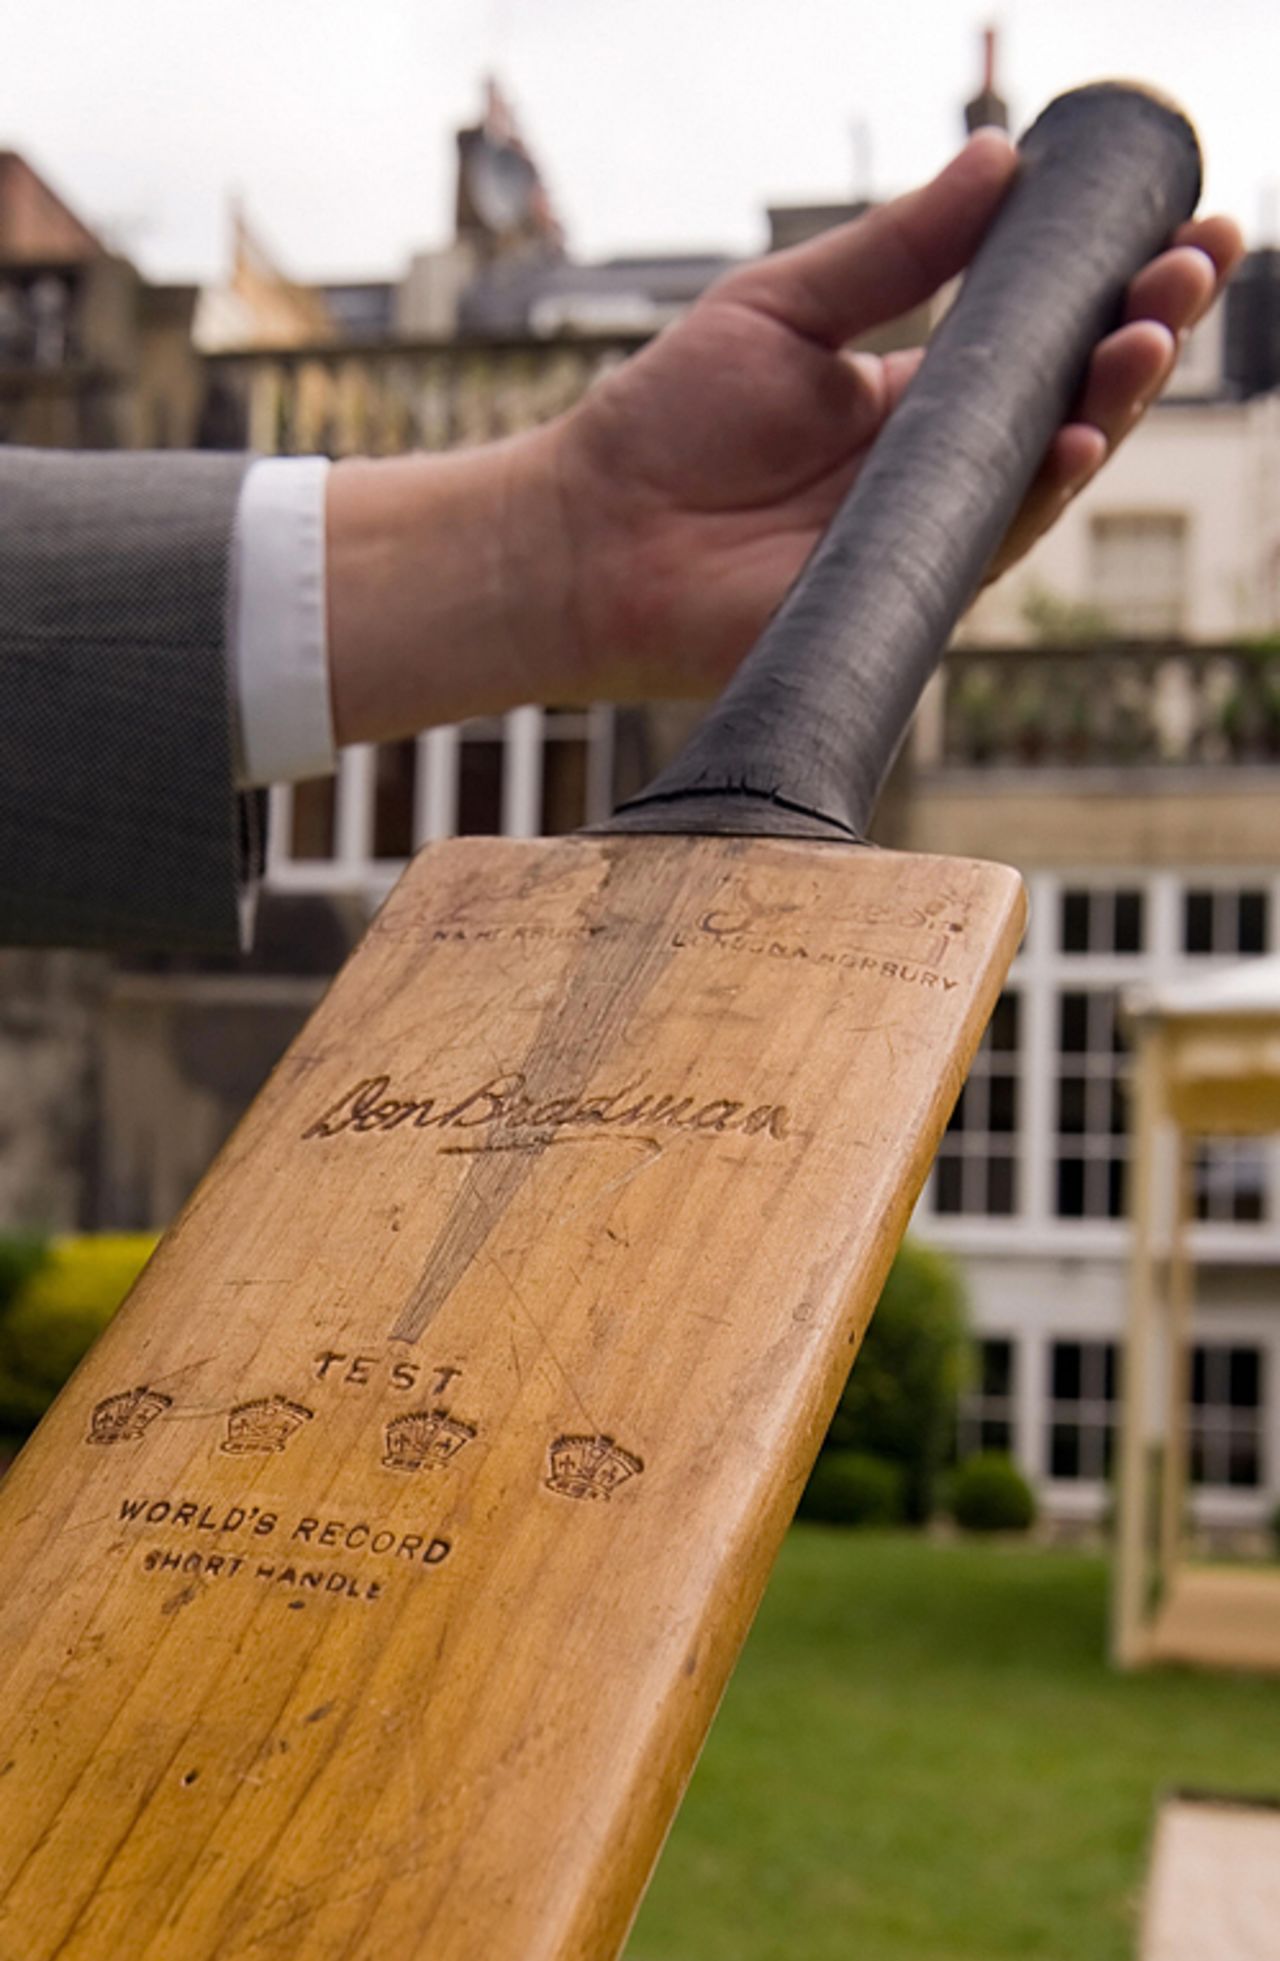 A close-up of the the '140 Bradman Cricket Bat', London, July 13, 2009